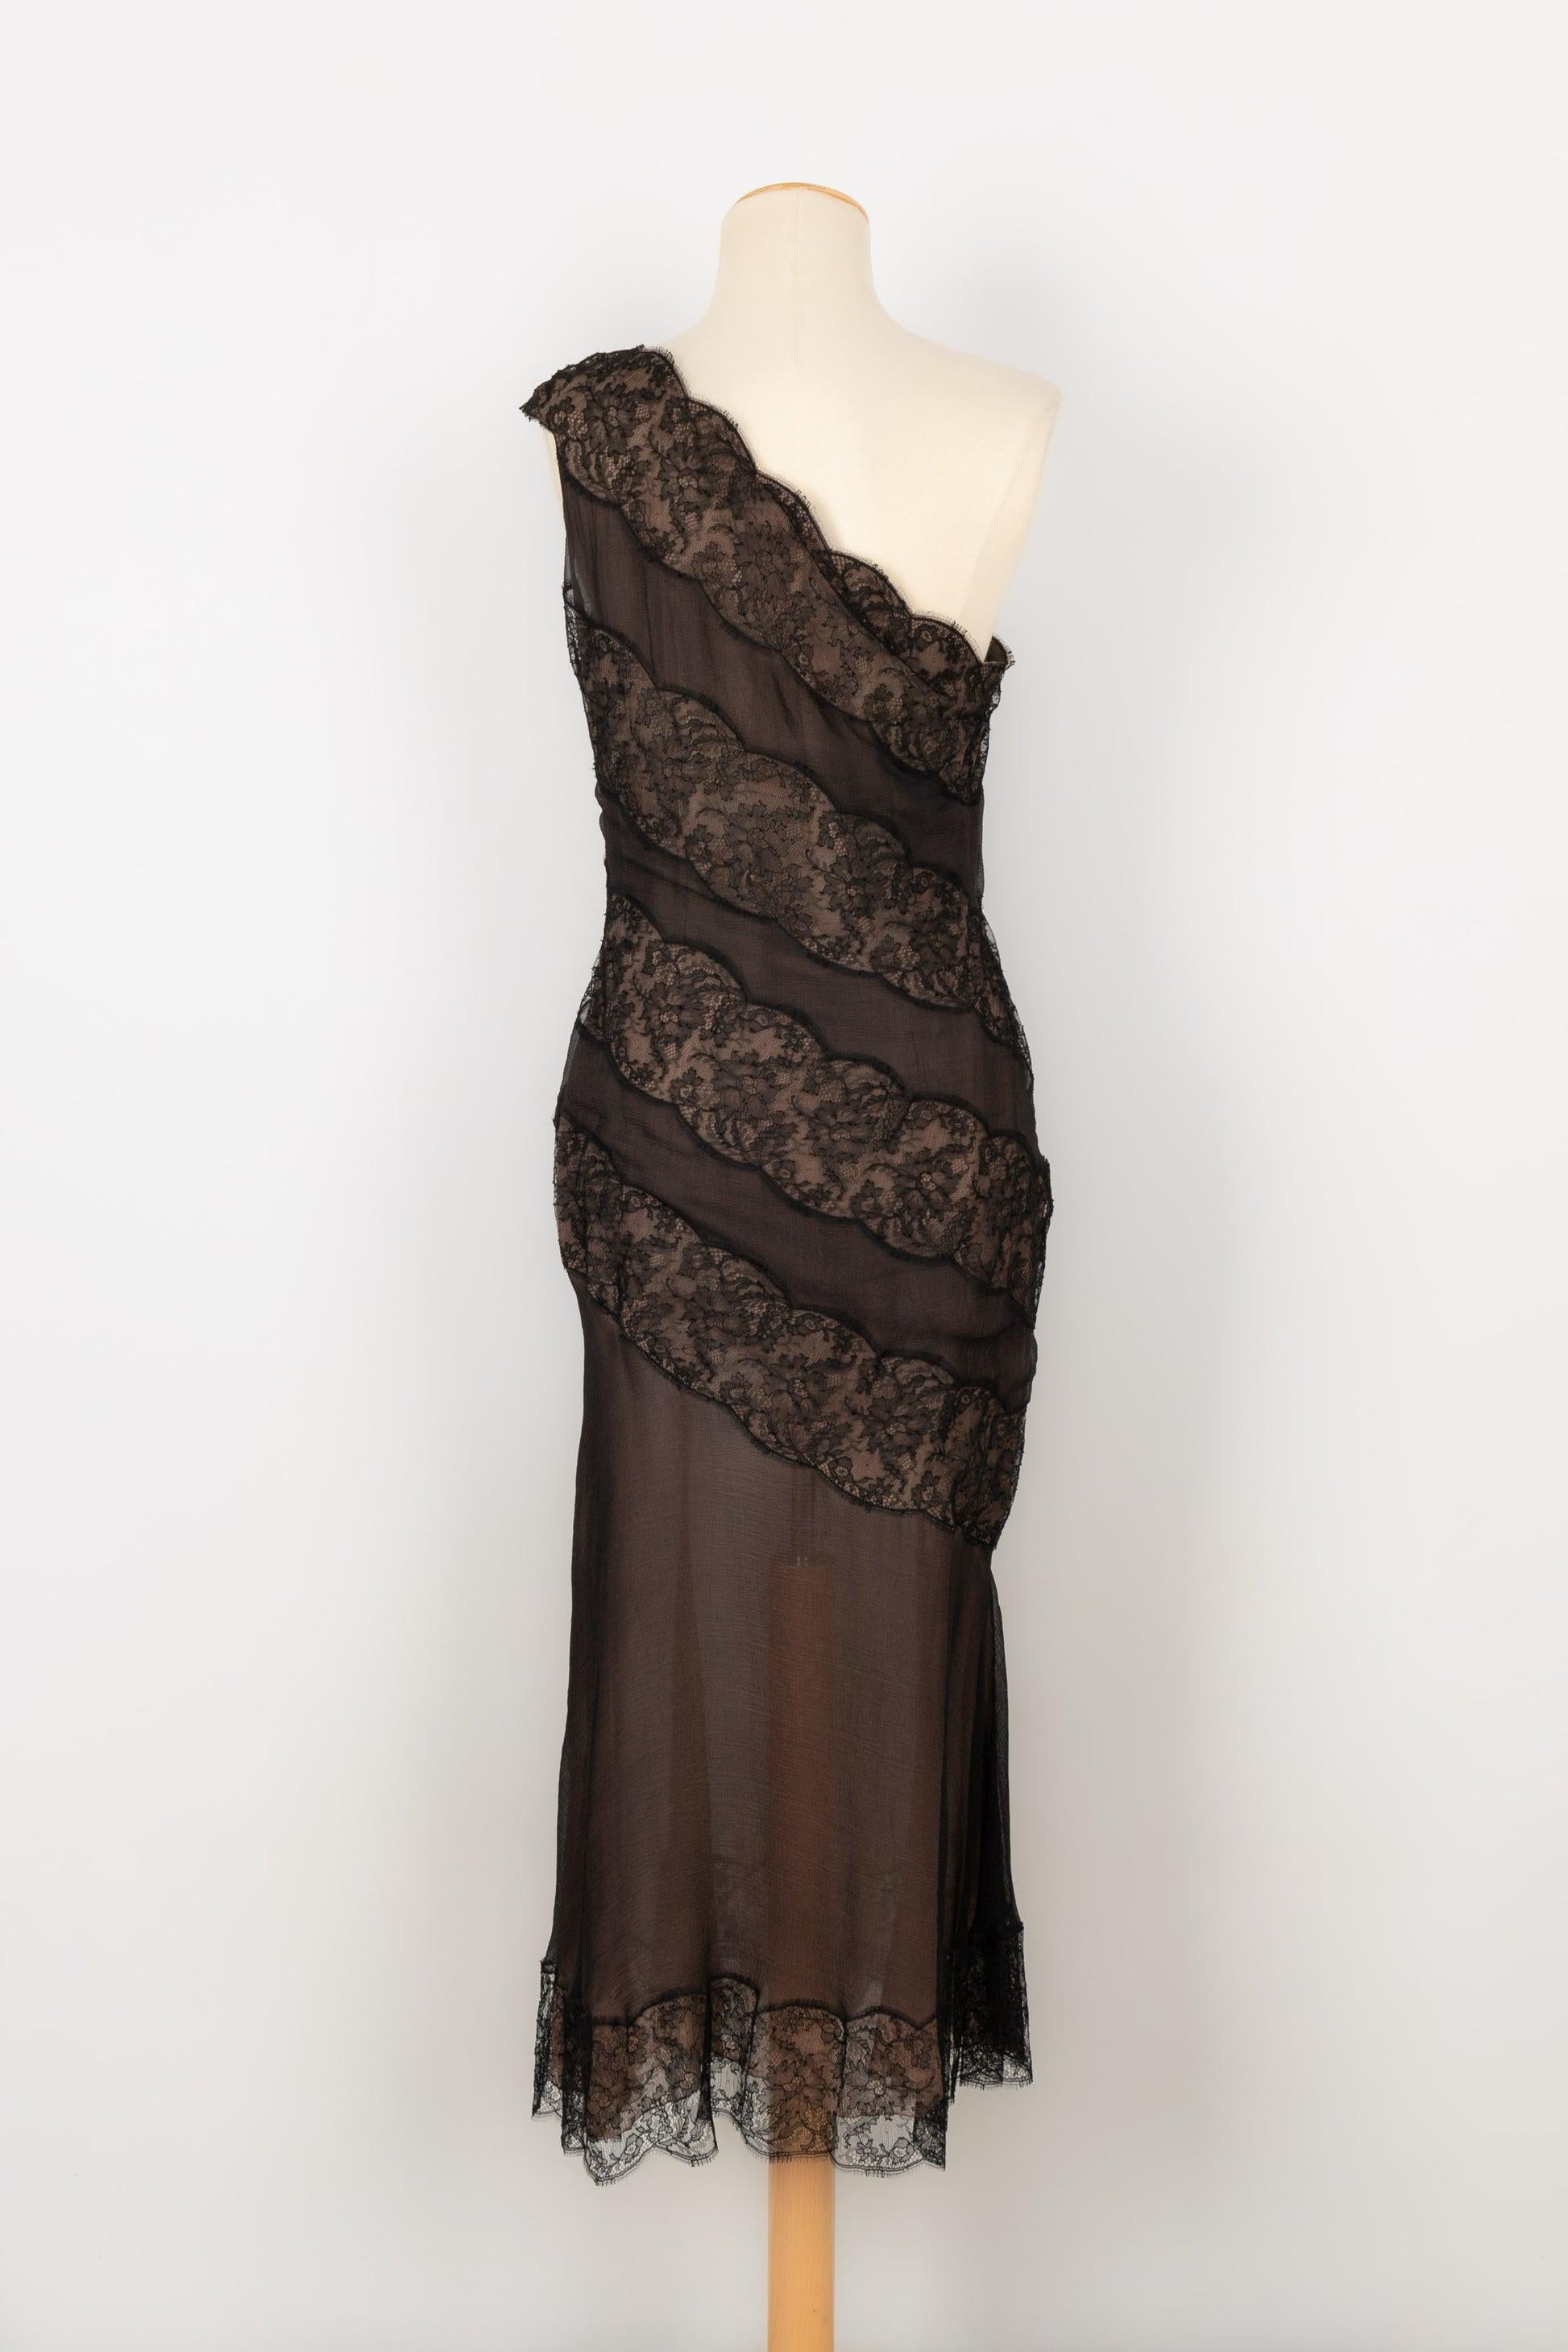 Balmain Couture Dress in Silk Crepe and Transparent Black Lace, circa 1990s In Excellent Condition For Sale In SAINT-OUEN-SUR-SEINE, FR